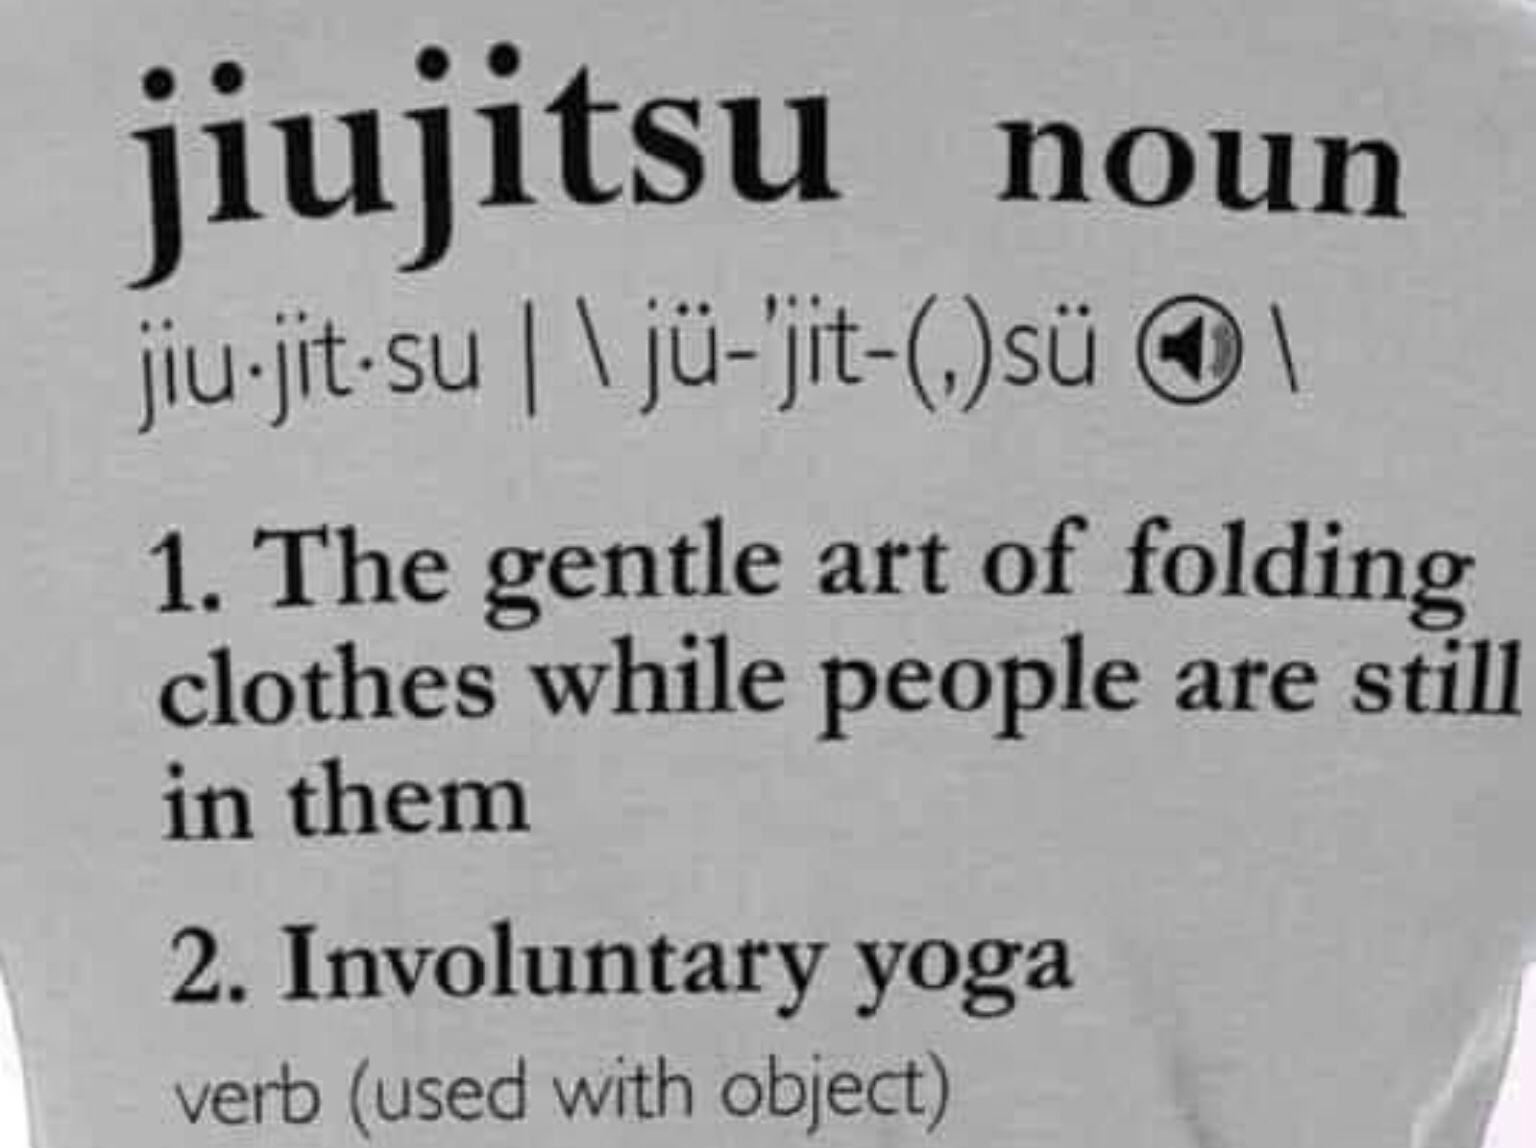 handwriting - jiujitsu noun jiujitsu | \j'jits 1 1. The gentle art of folding clothes while people are still in them 2. Involuntary yoga verb used with object